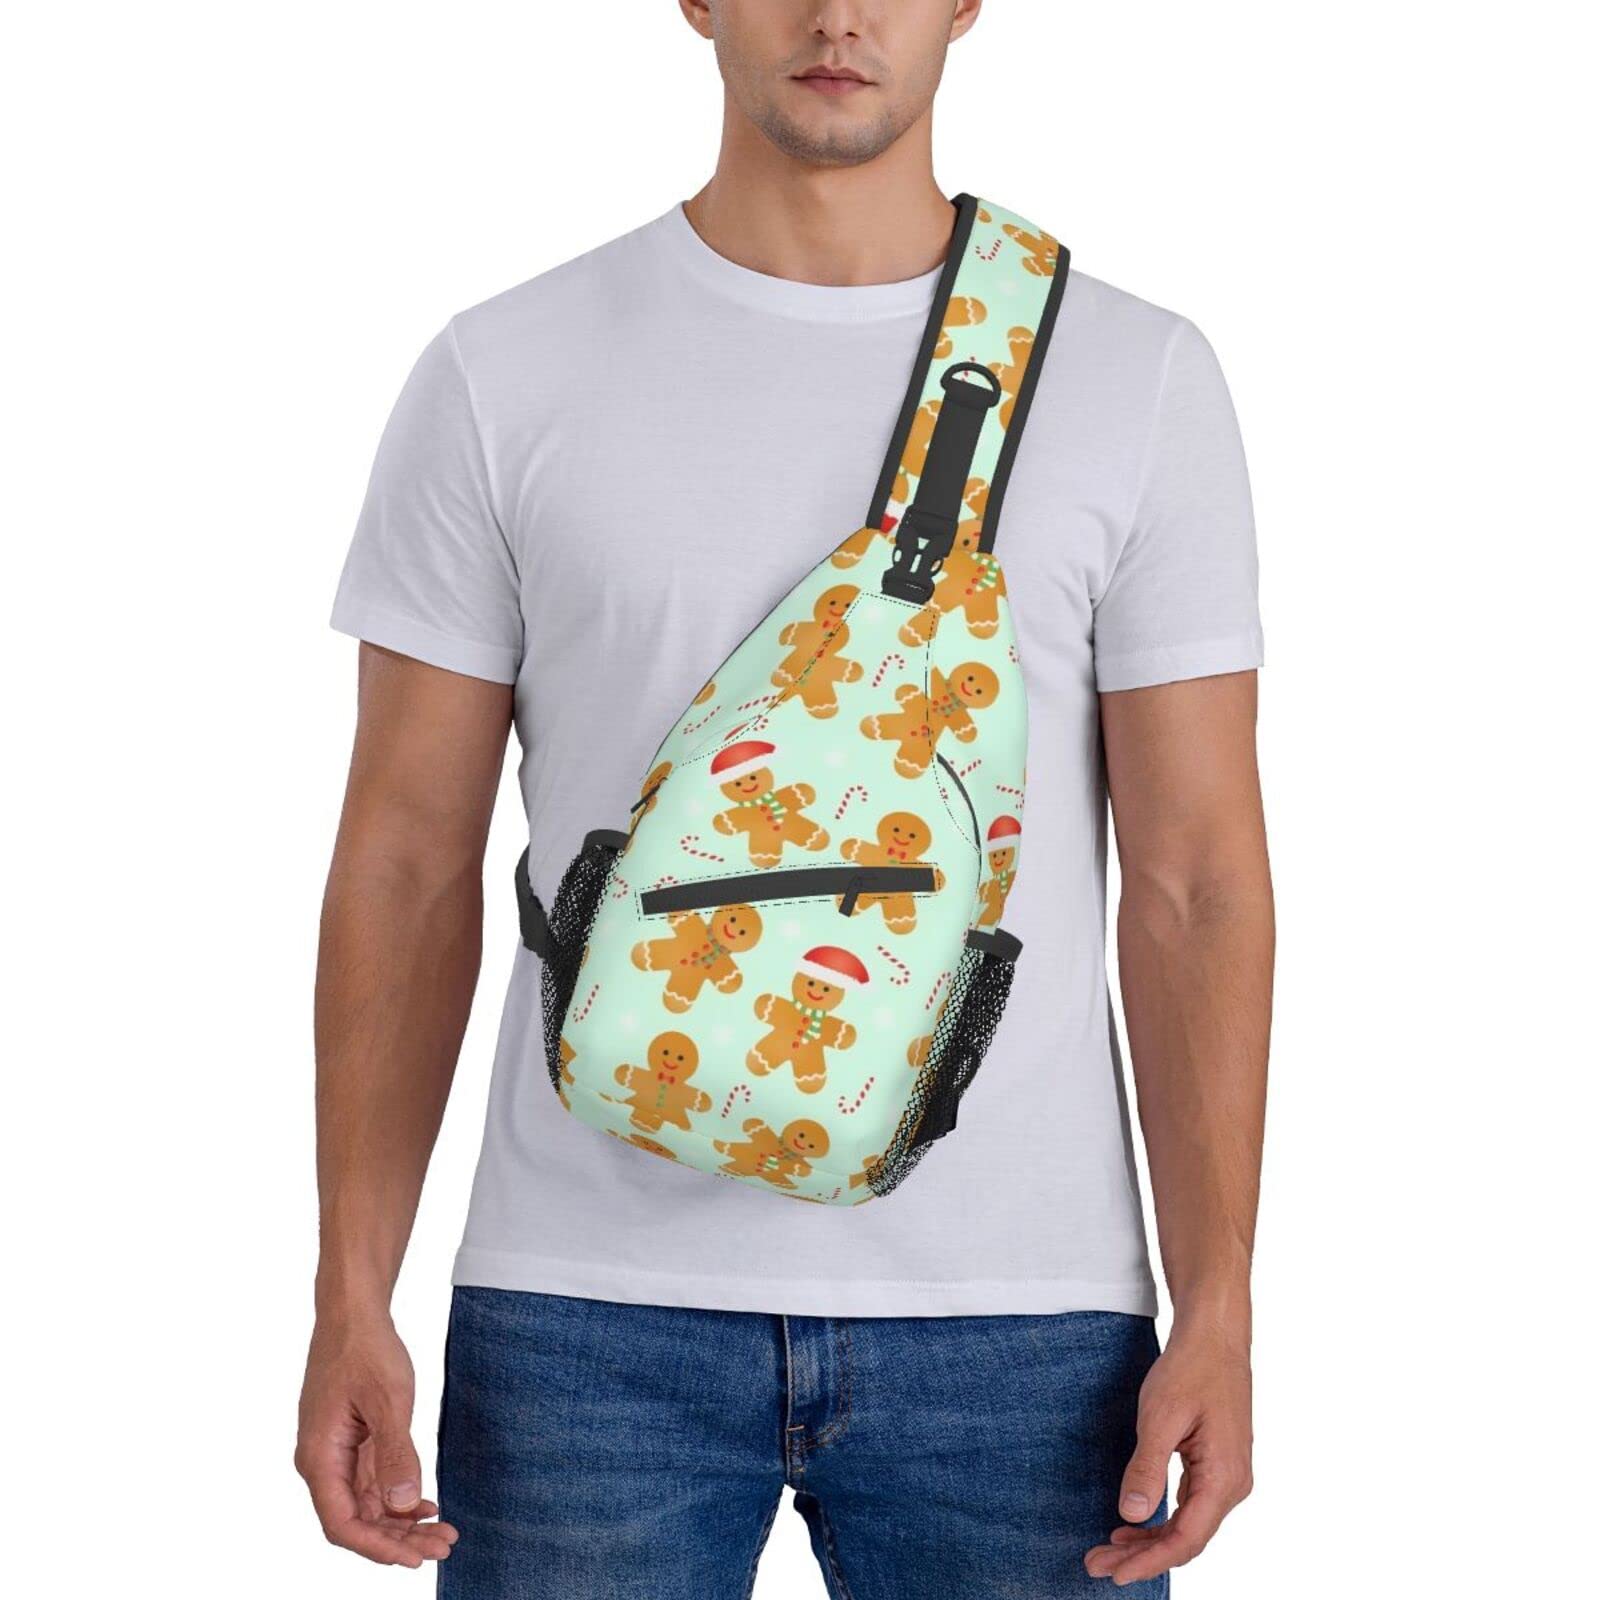 Mvirnsw Gingerbread Men Pattern Sling Bag Crossbody Backpack Hiking Travel Daypack Chest Bag Shoulder Bag For Women Men